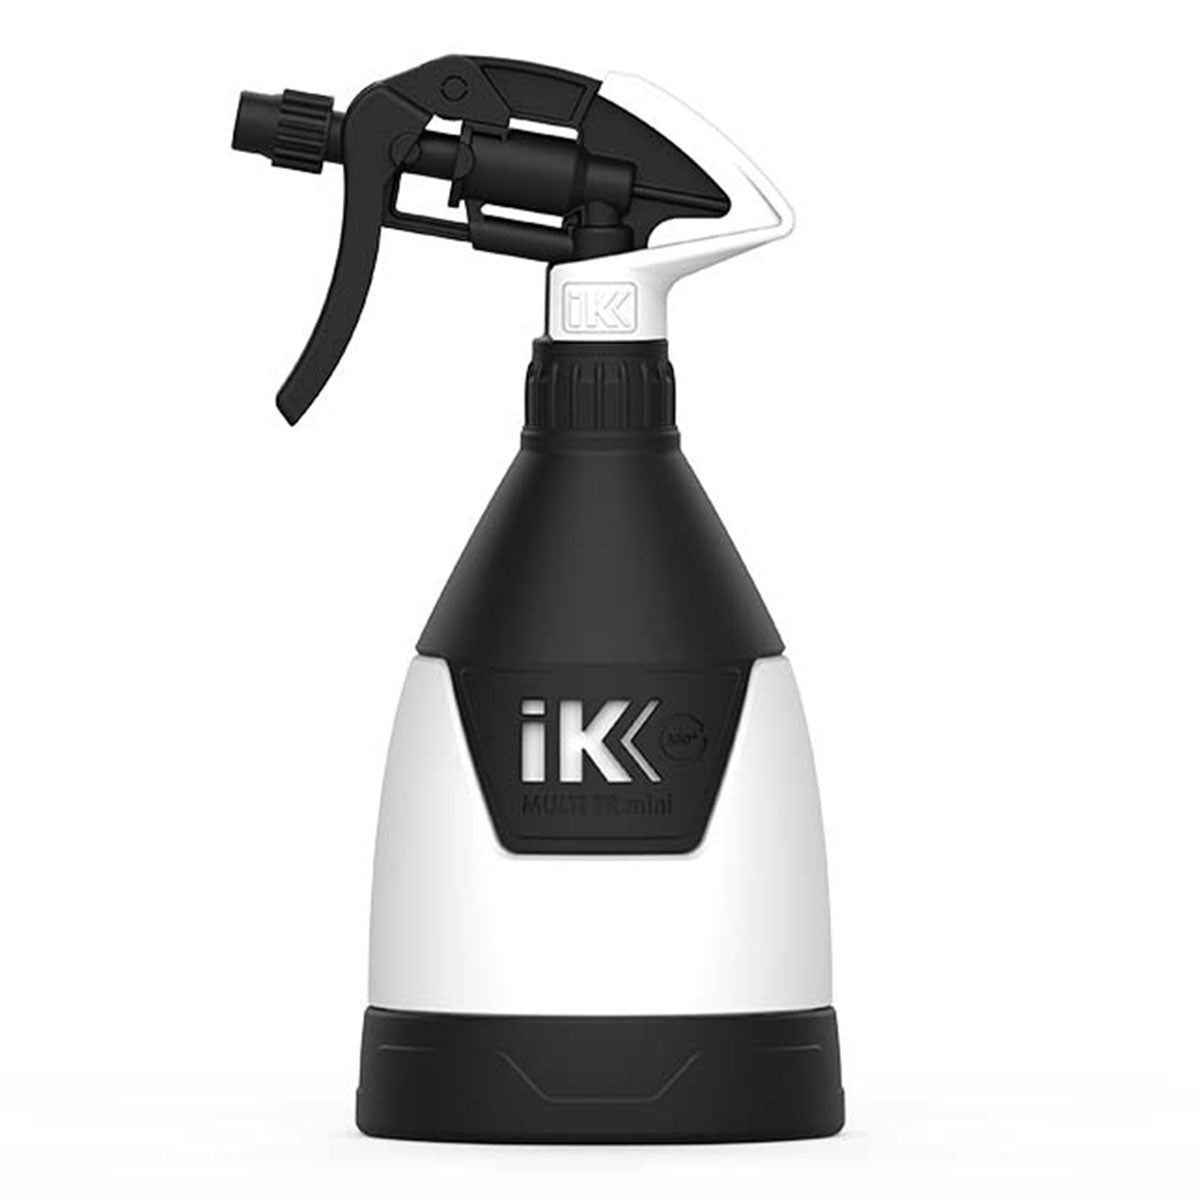 IK Sprayer Multi Trigger MINI (360) For Detailing and Car Wash